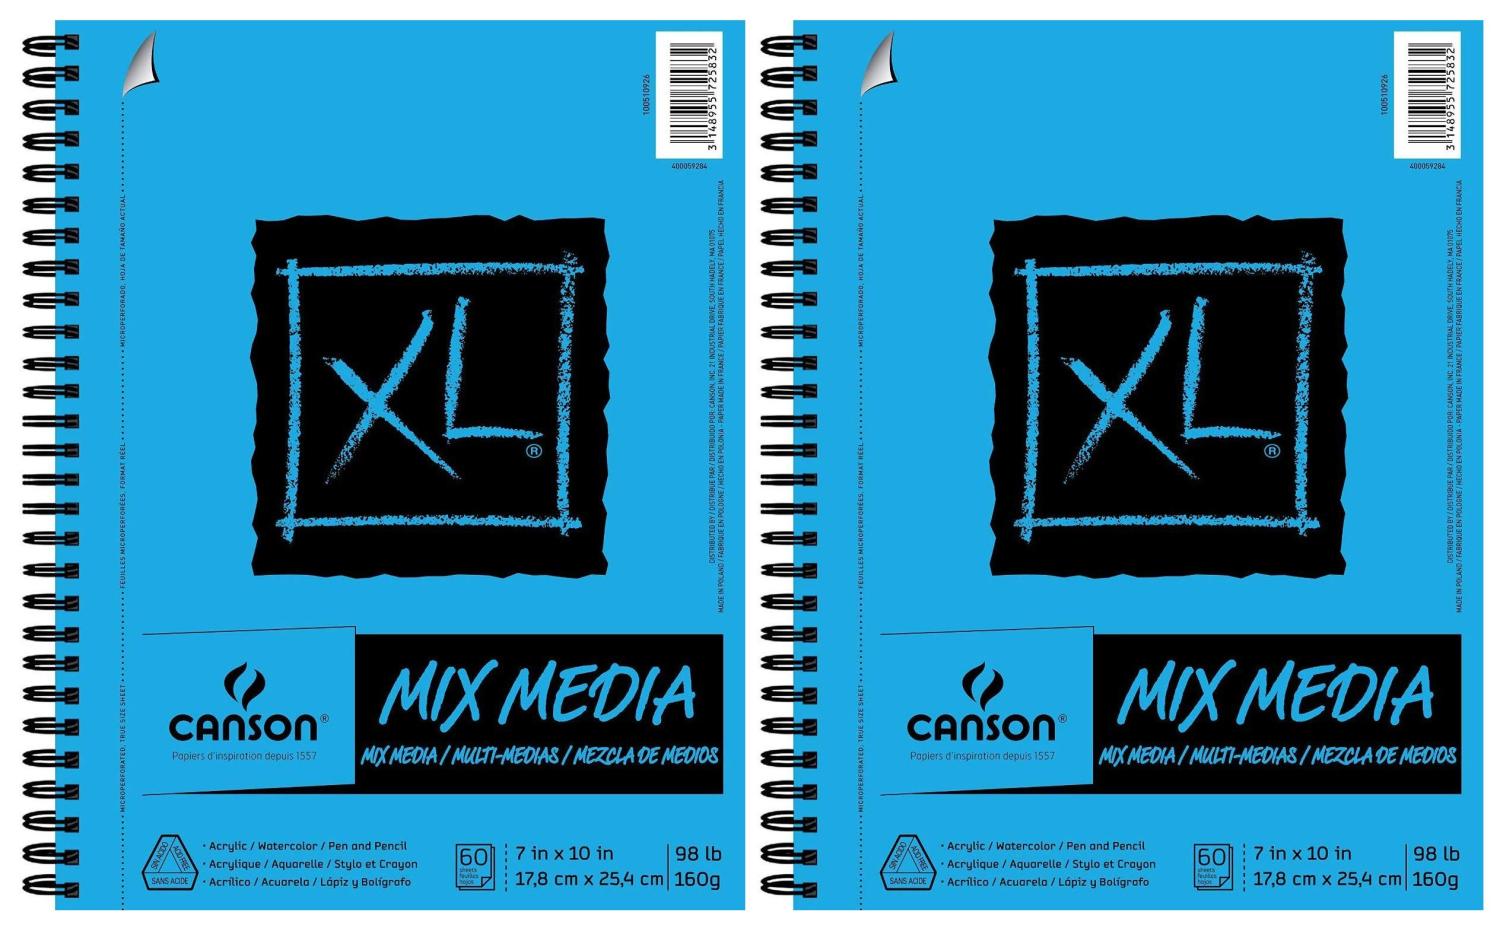  Canson XL Series Mix Media Paper Pad, Heavyweight